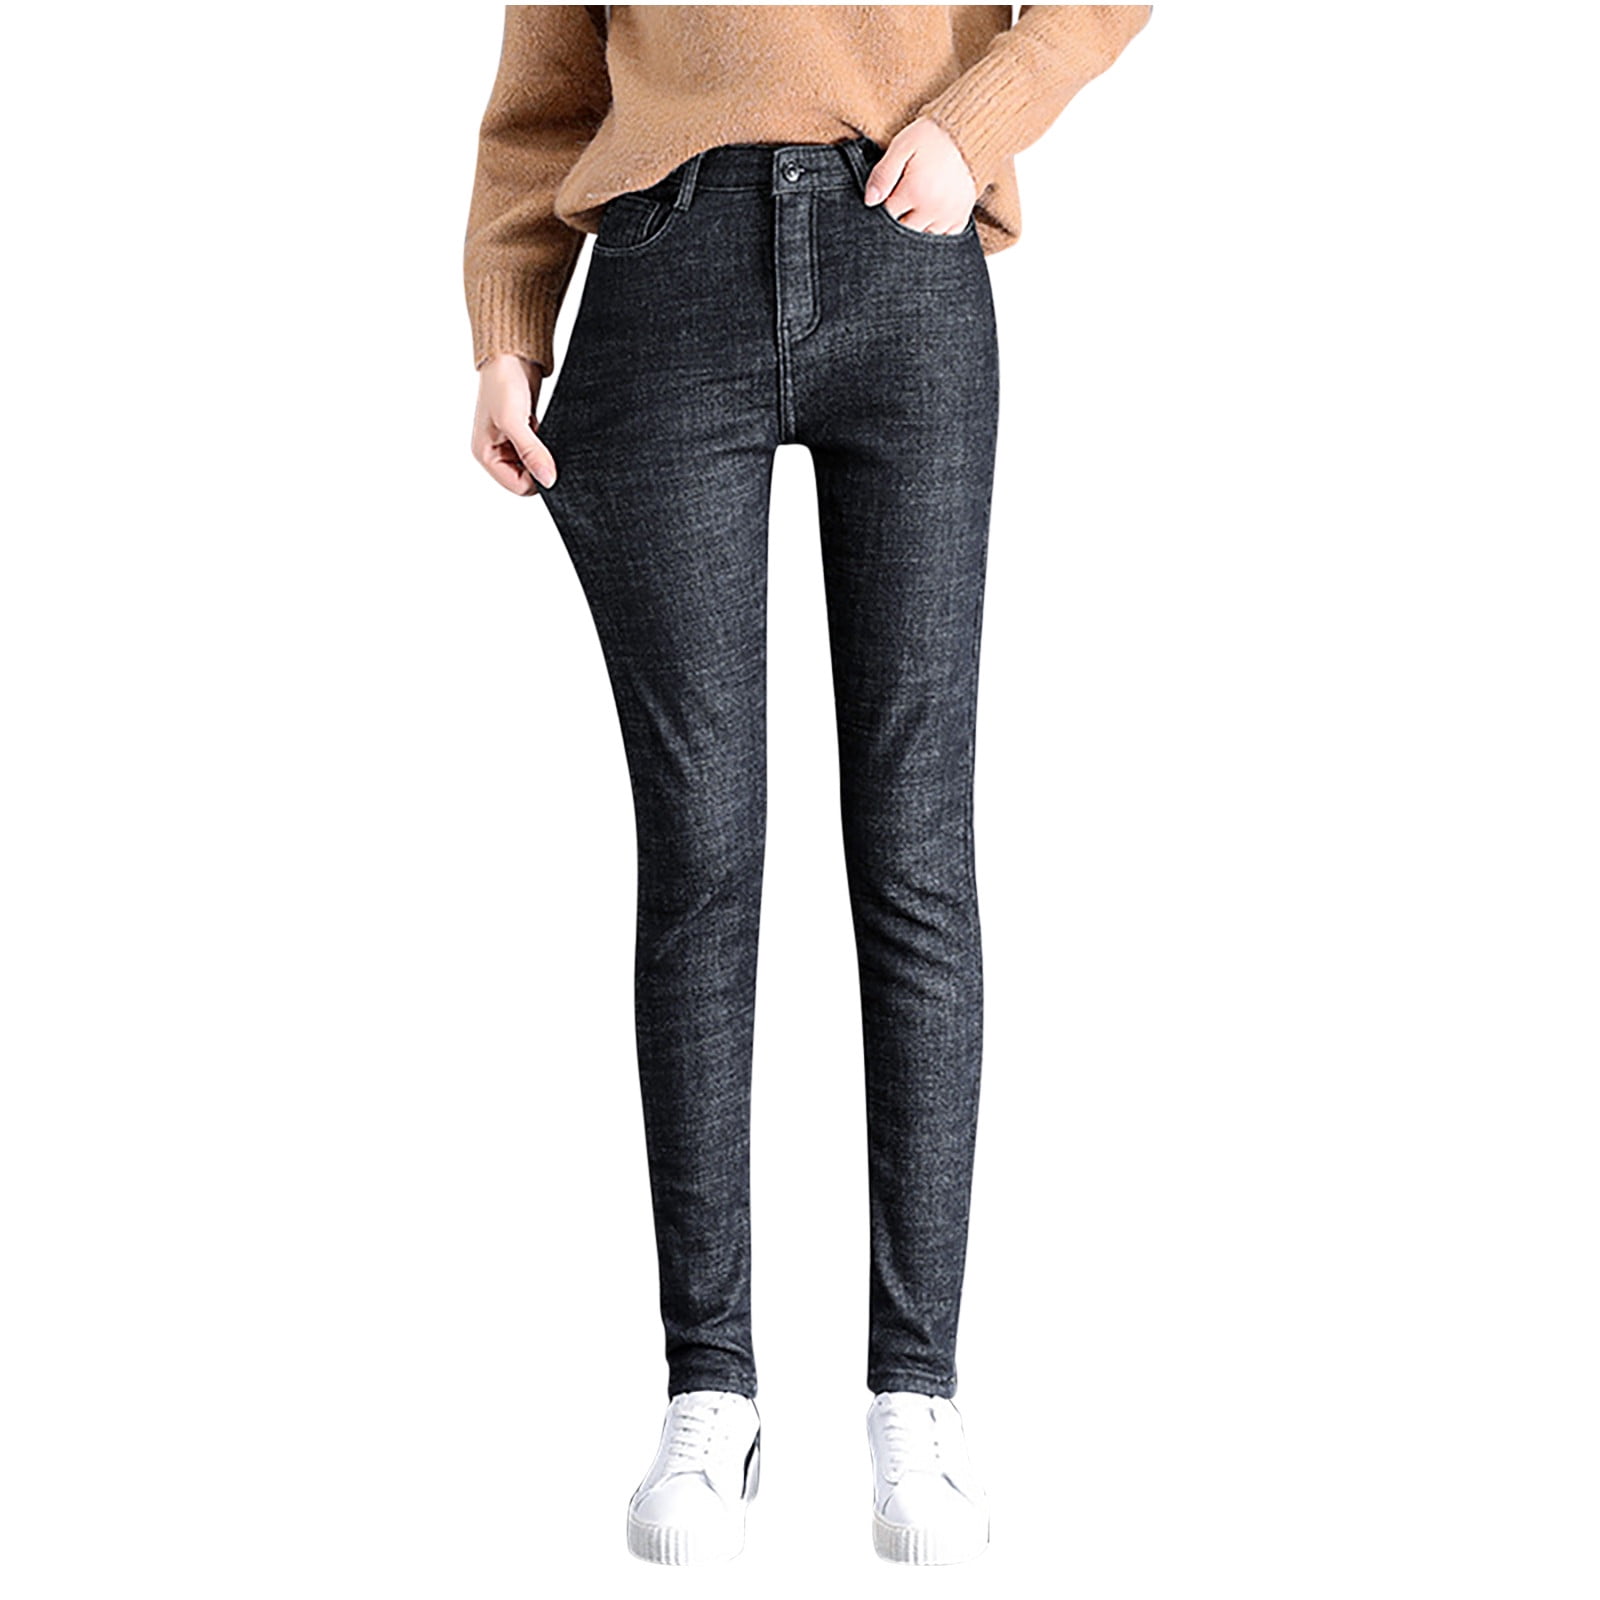 Shpwfbe Jeans For Women Trendy Stretch Jeggings Fashion Women Plus Size ...